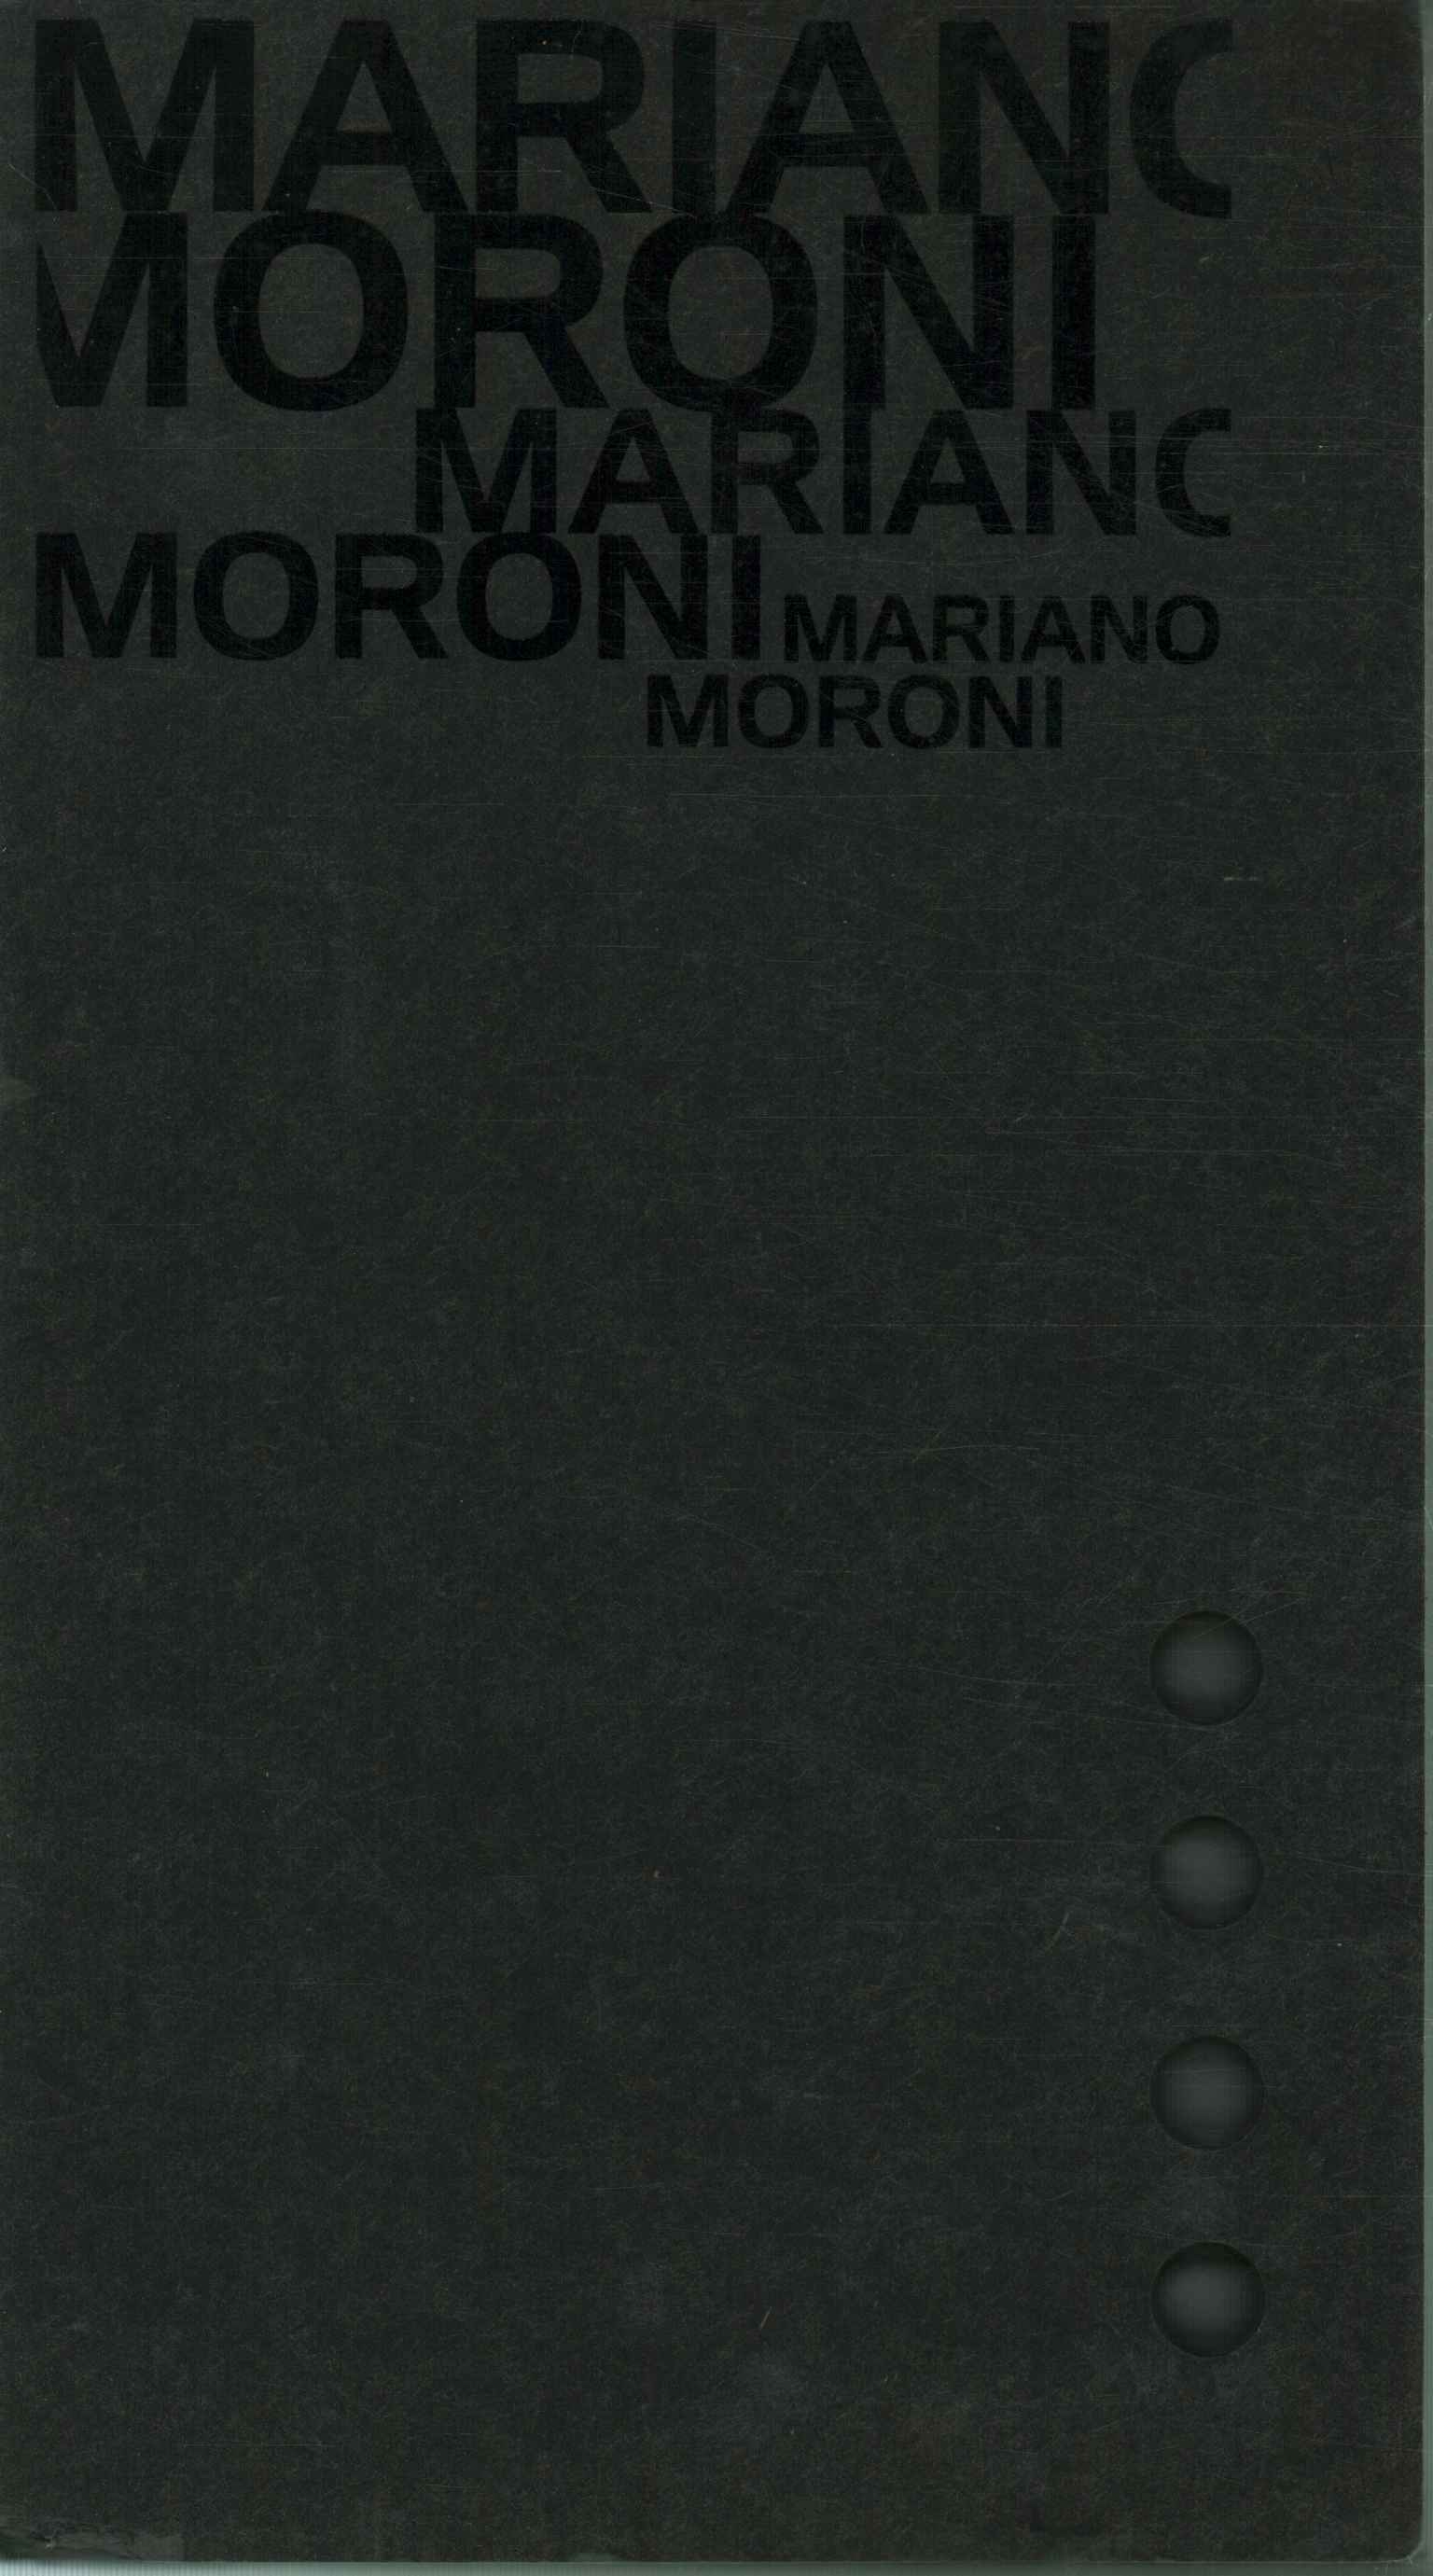 Mariano Moroni